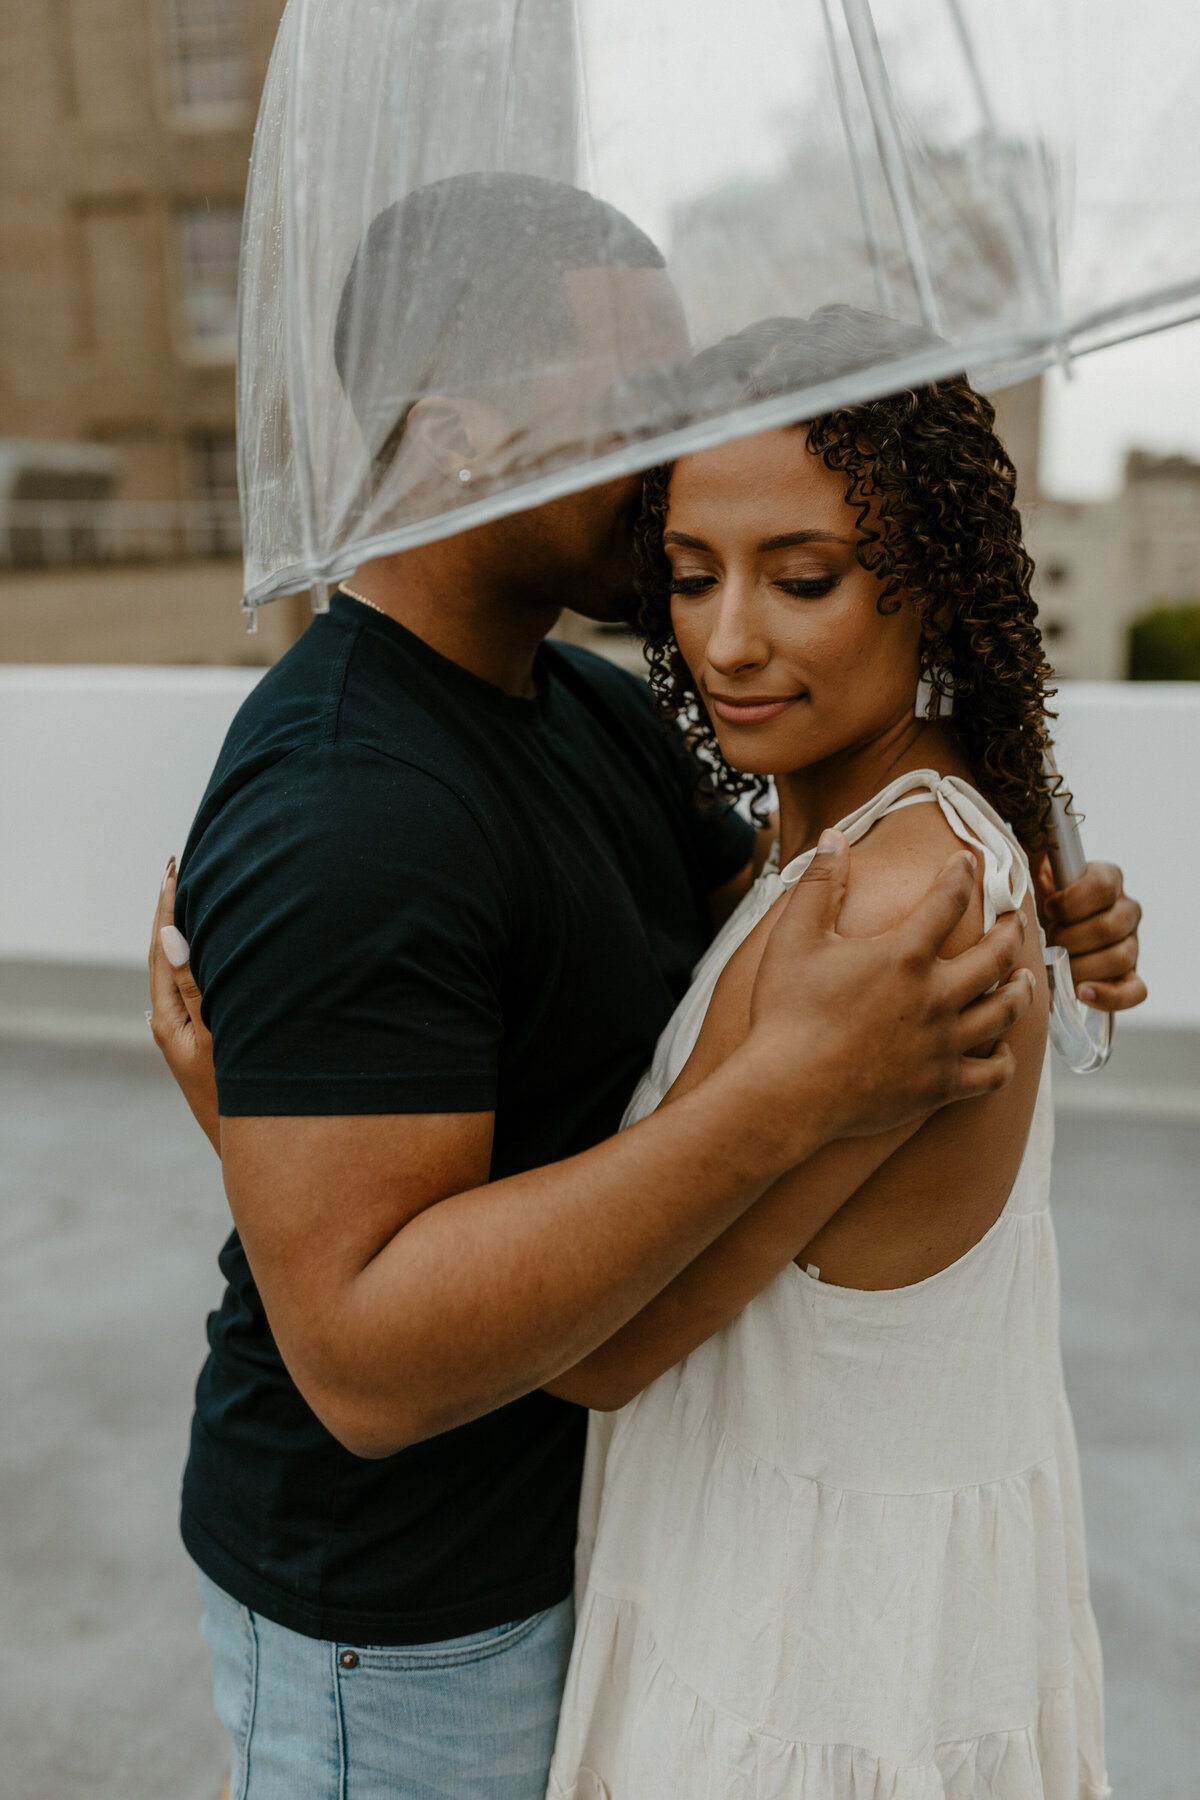 Engagement Photos in Virginia | VA Wedding Photographer10